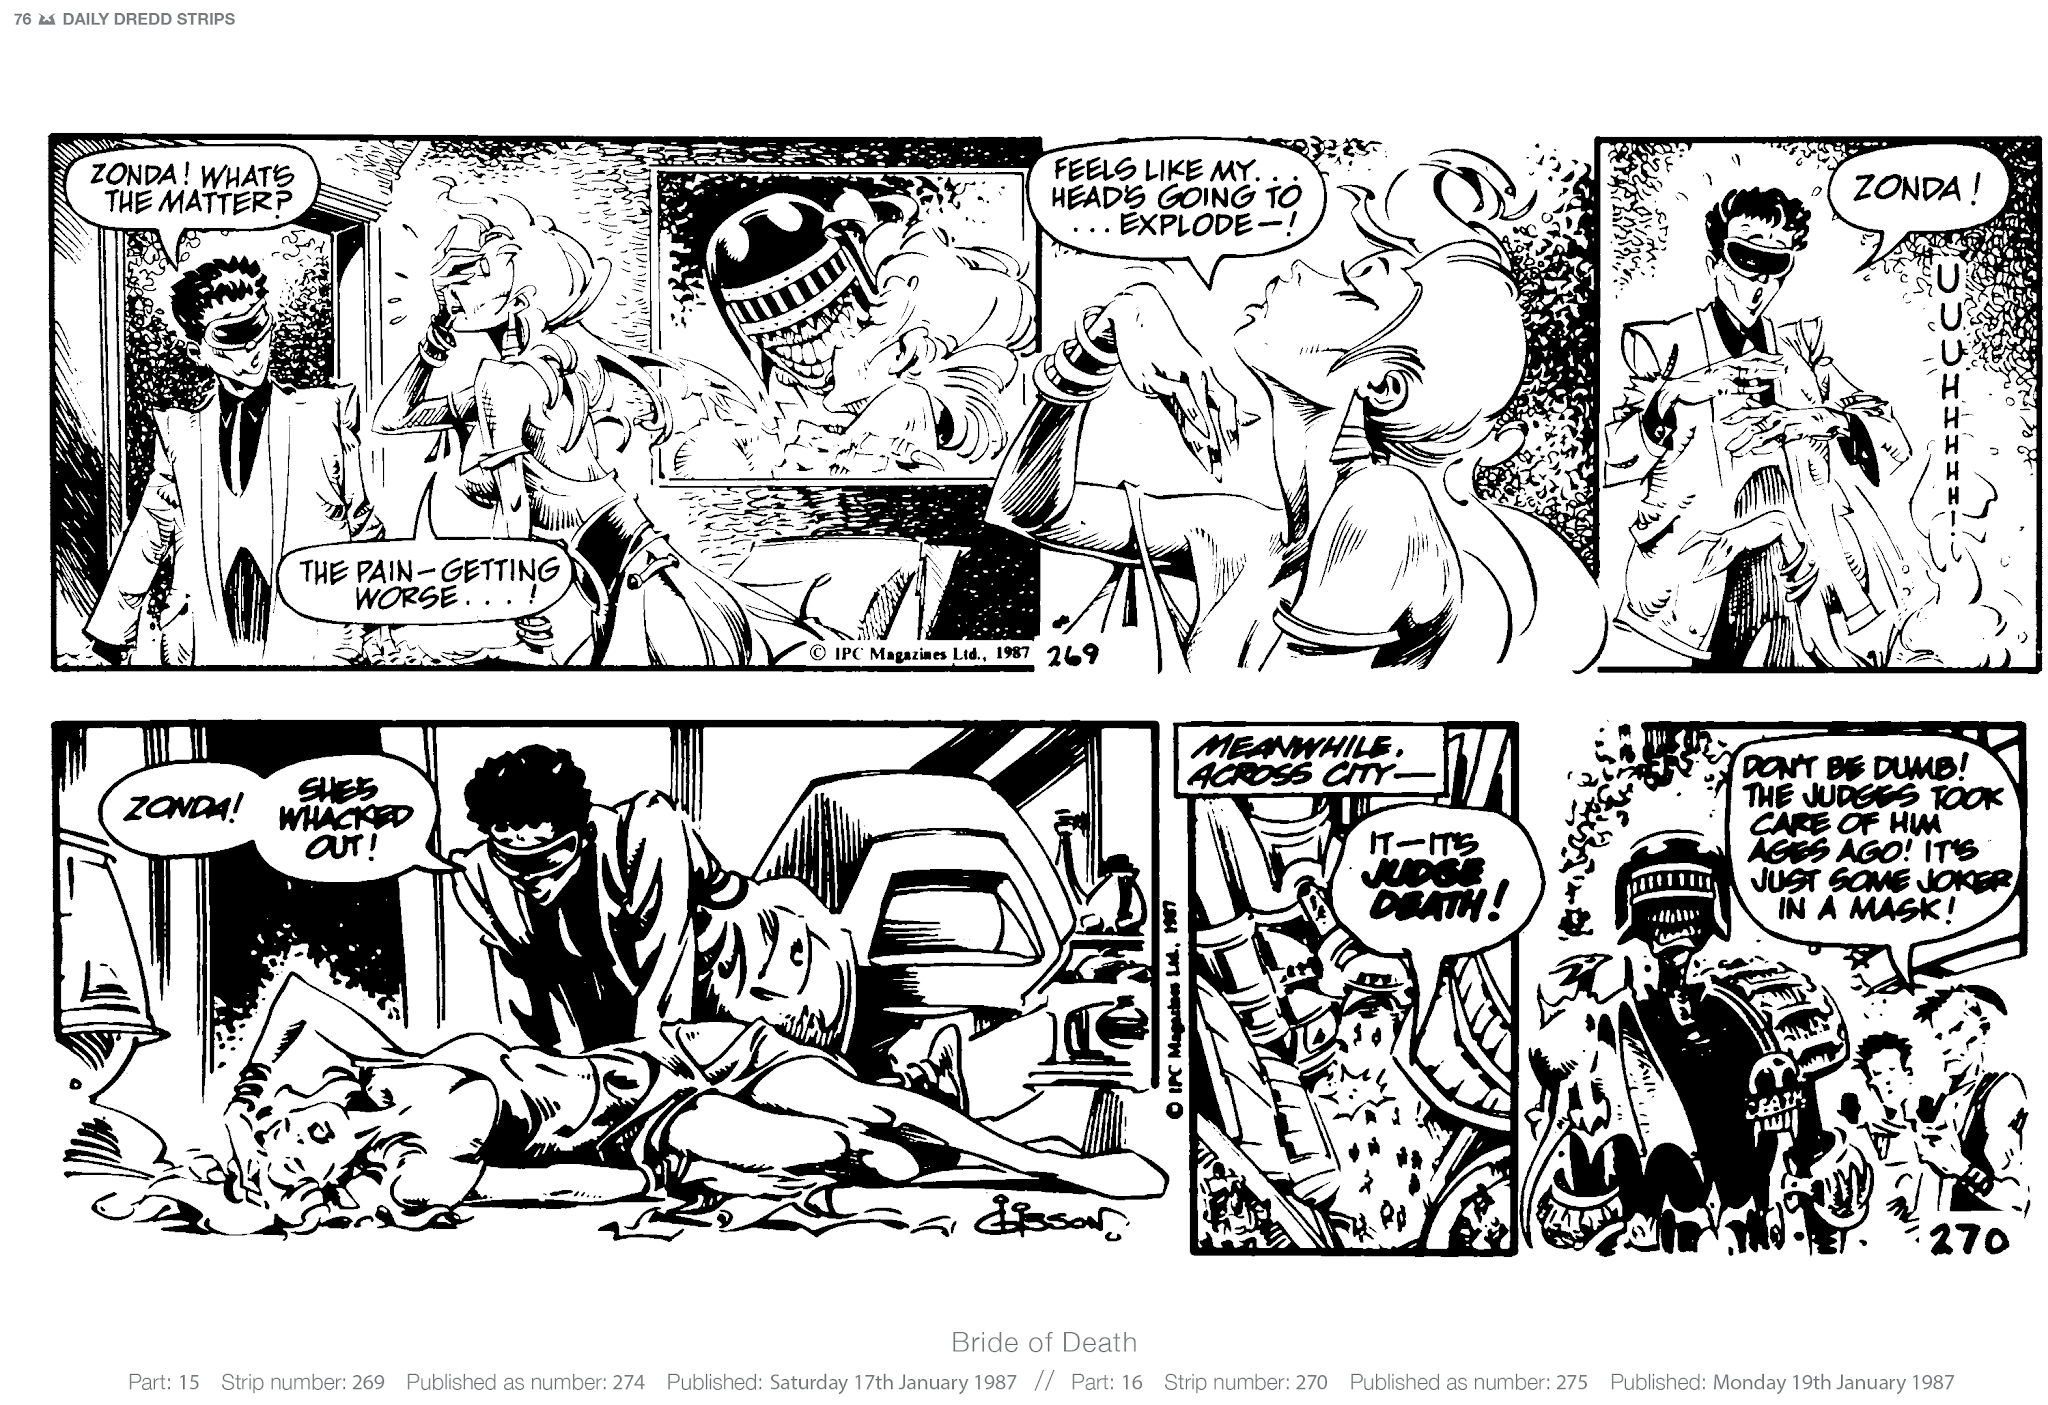 Read online Judge Dredd: The Daily Dredds comic -  Issue # TPB 2 - 79